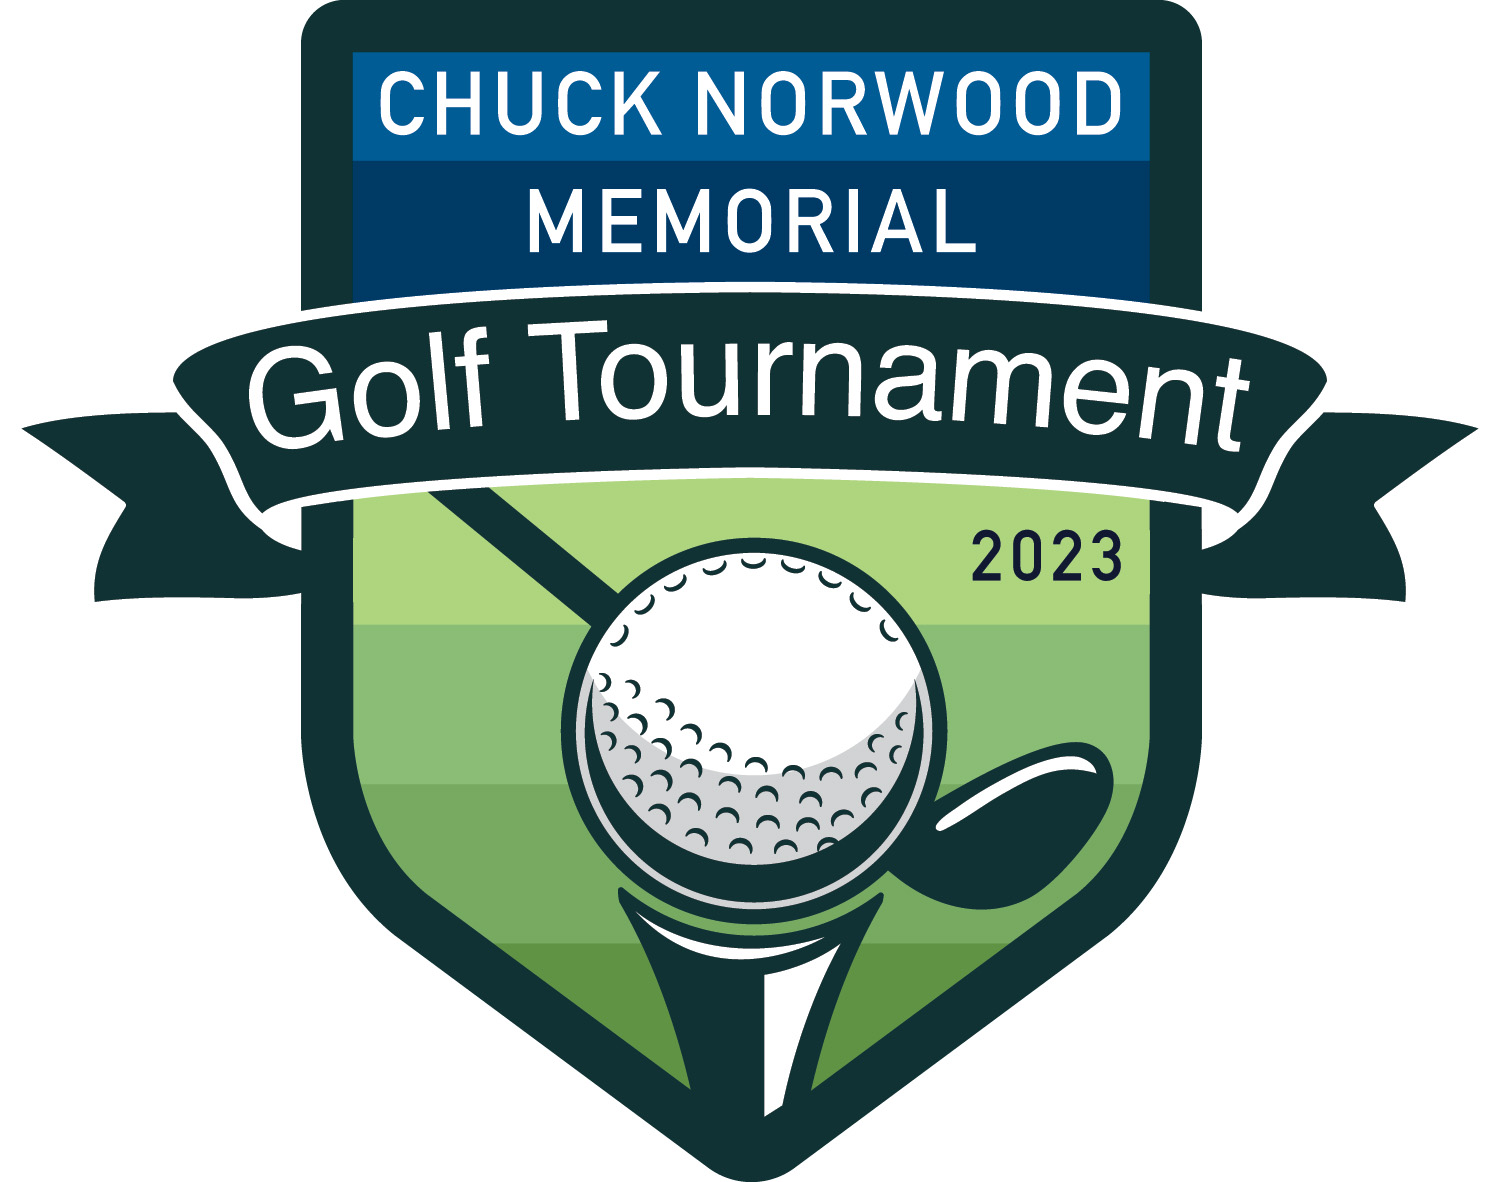 Chuck Norwood Memorial Golf Tournament 2023